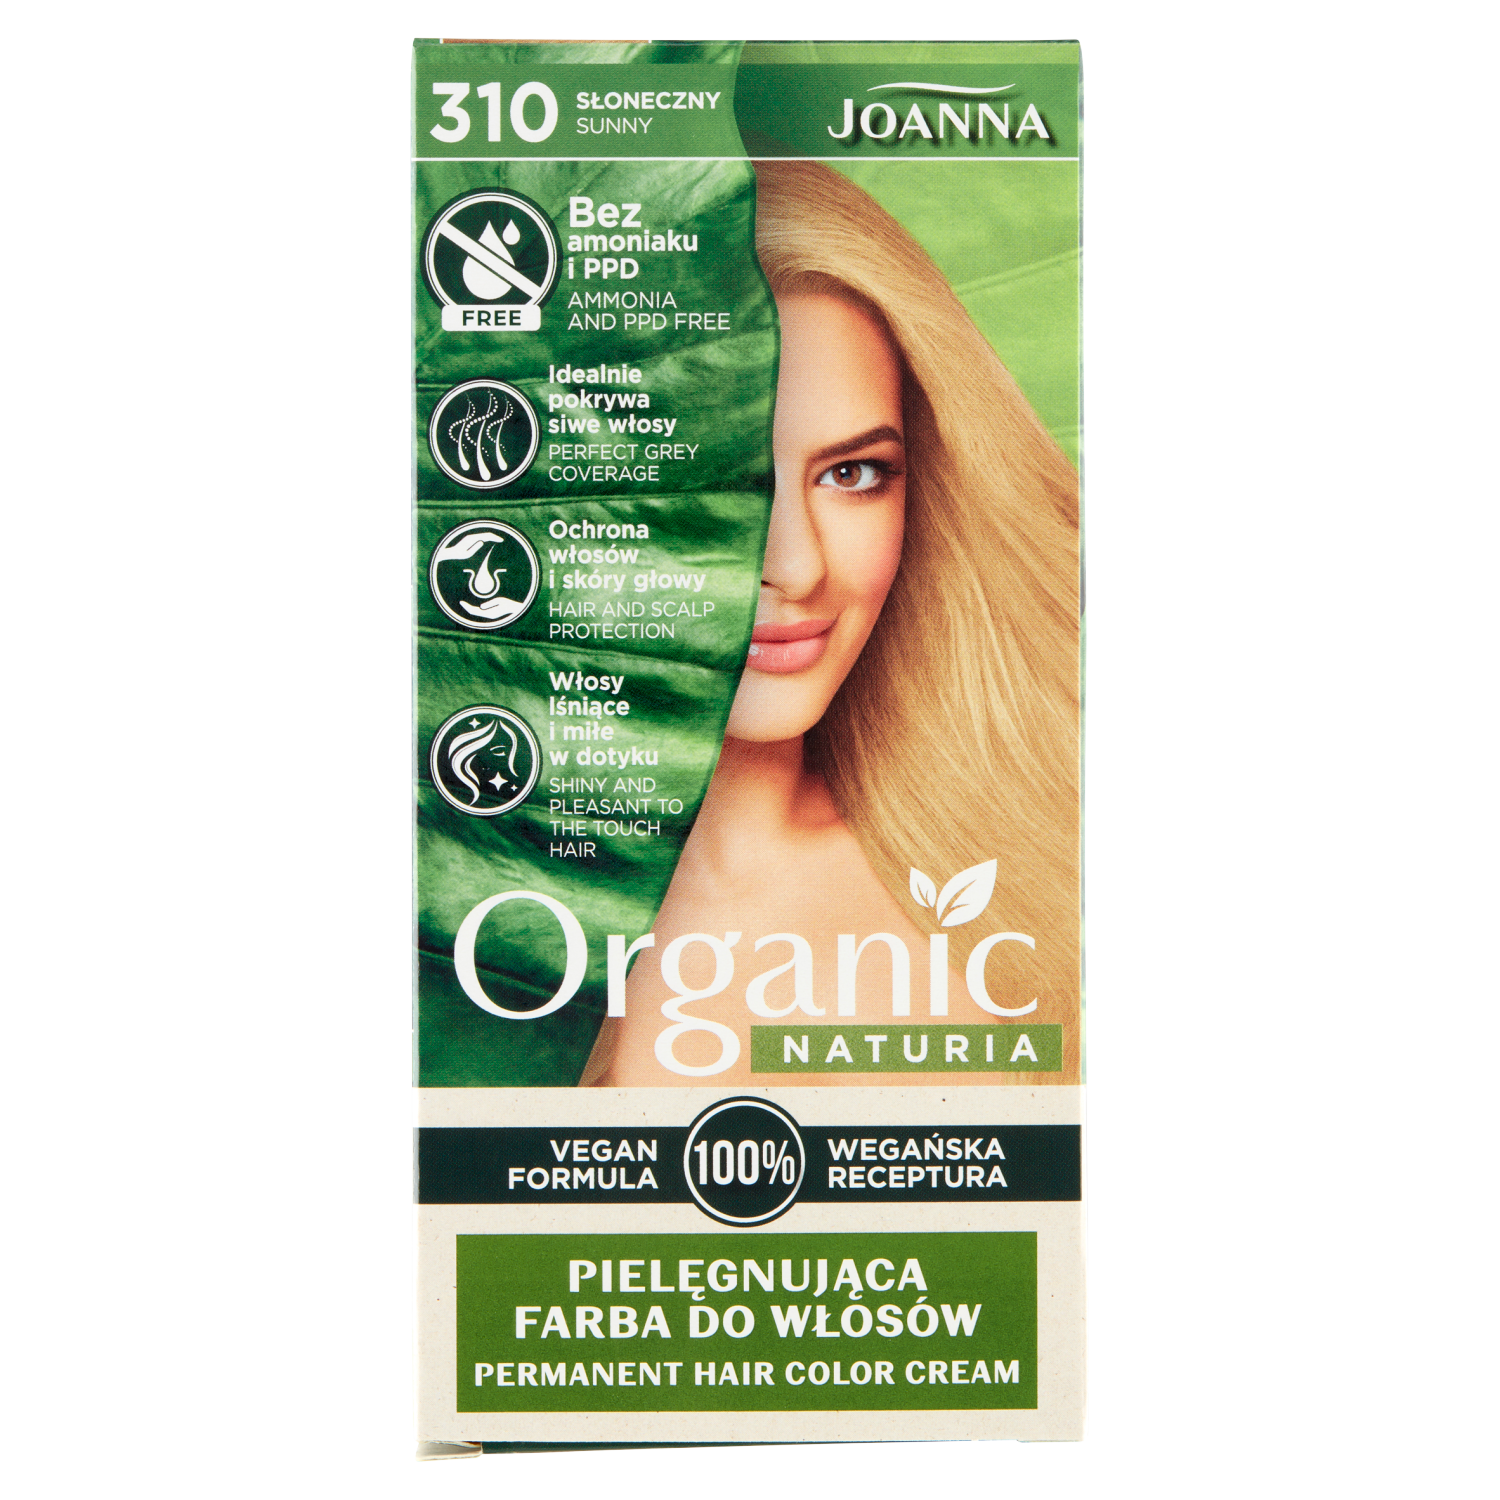 Краска для волос солнечный блондин Joanna Naturia Organic, 310 мл цена и фото